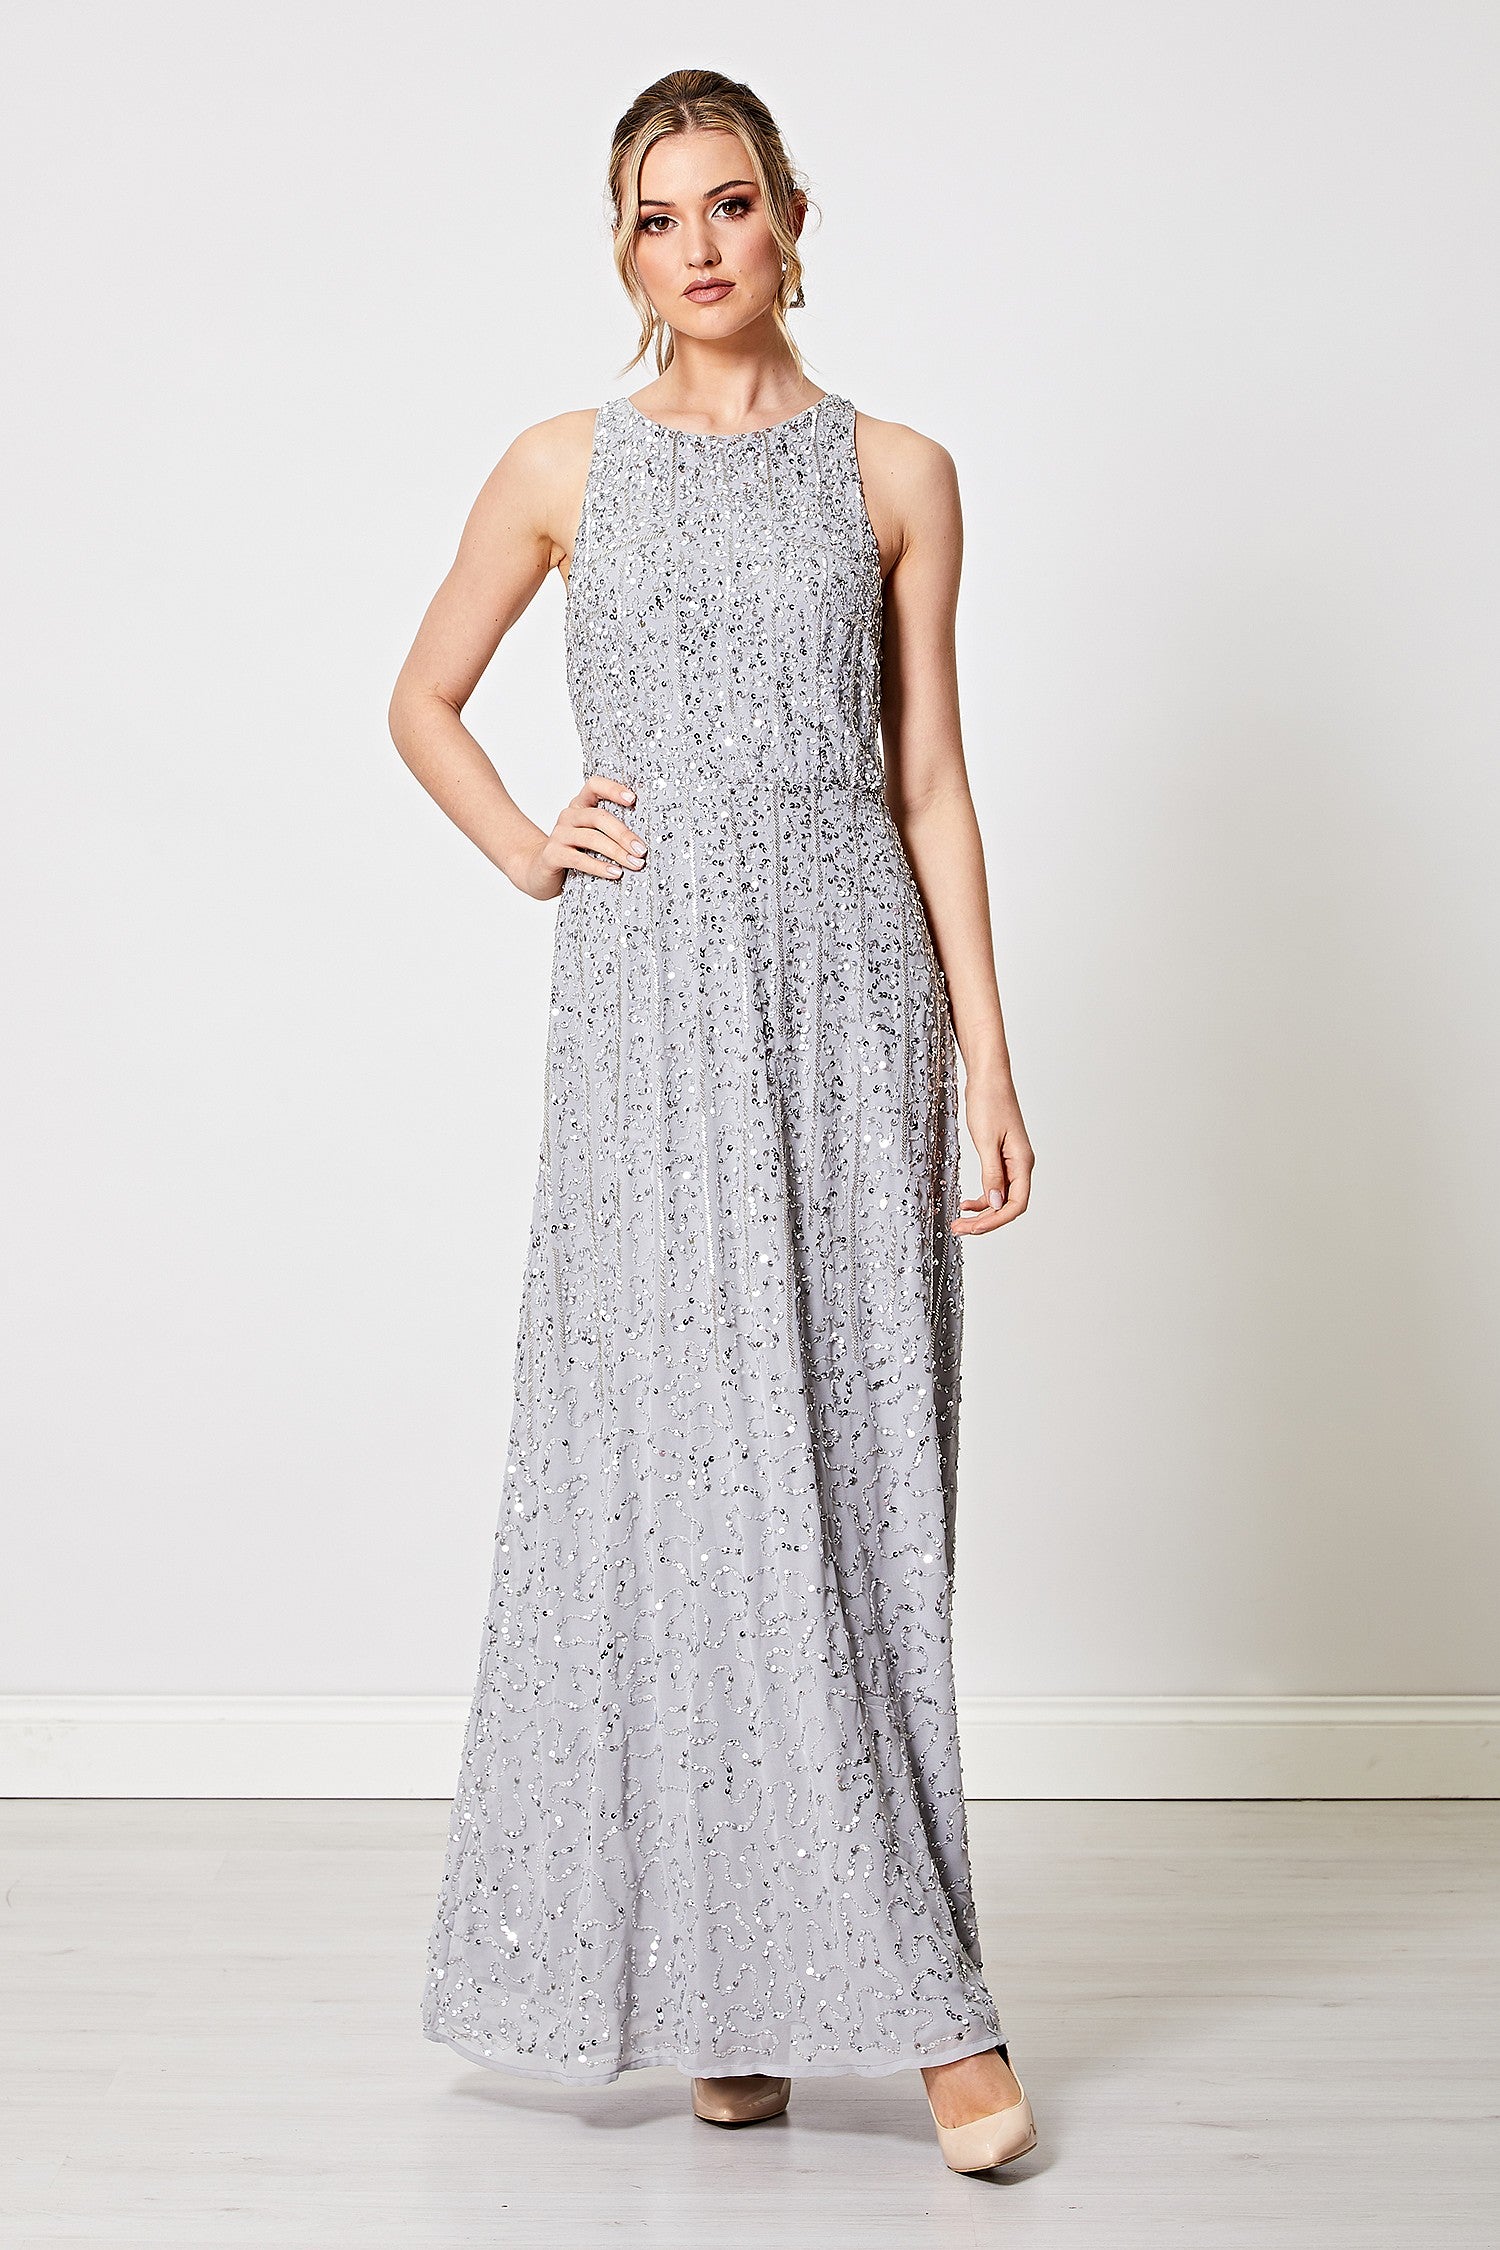 Amara Silver Embellished Sequin Beaded Sleeveless Maxi Dress